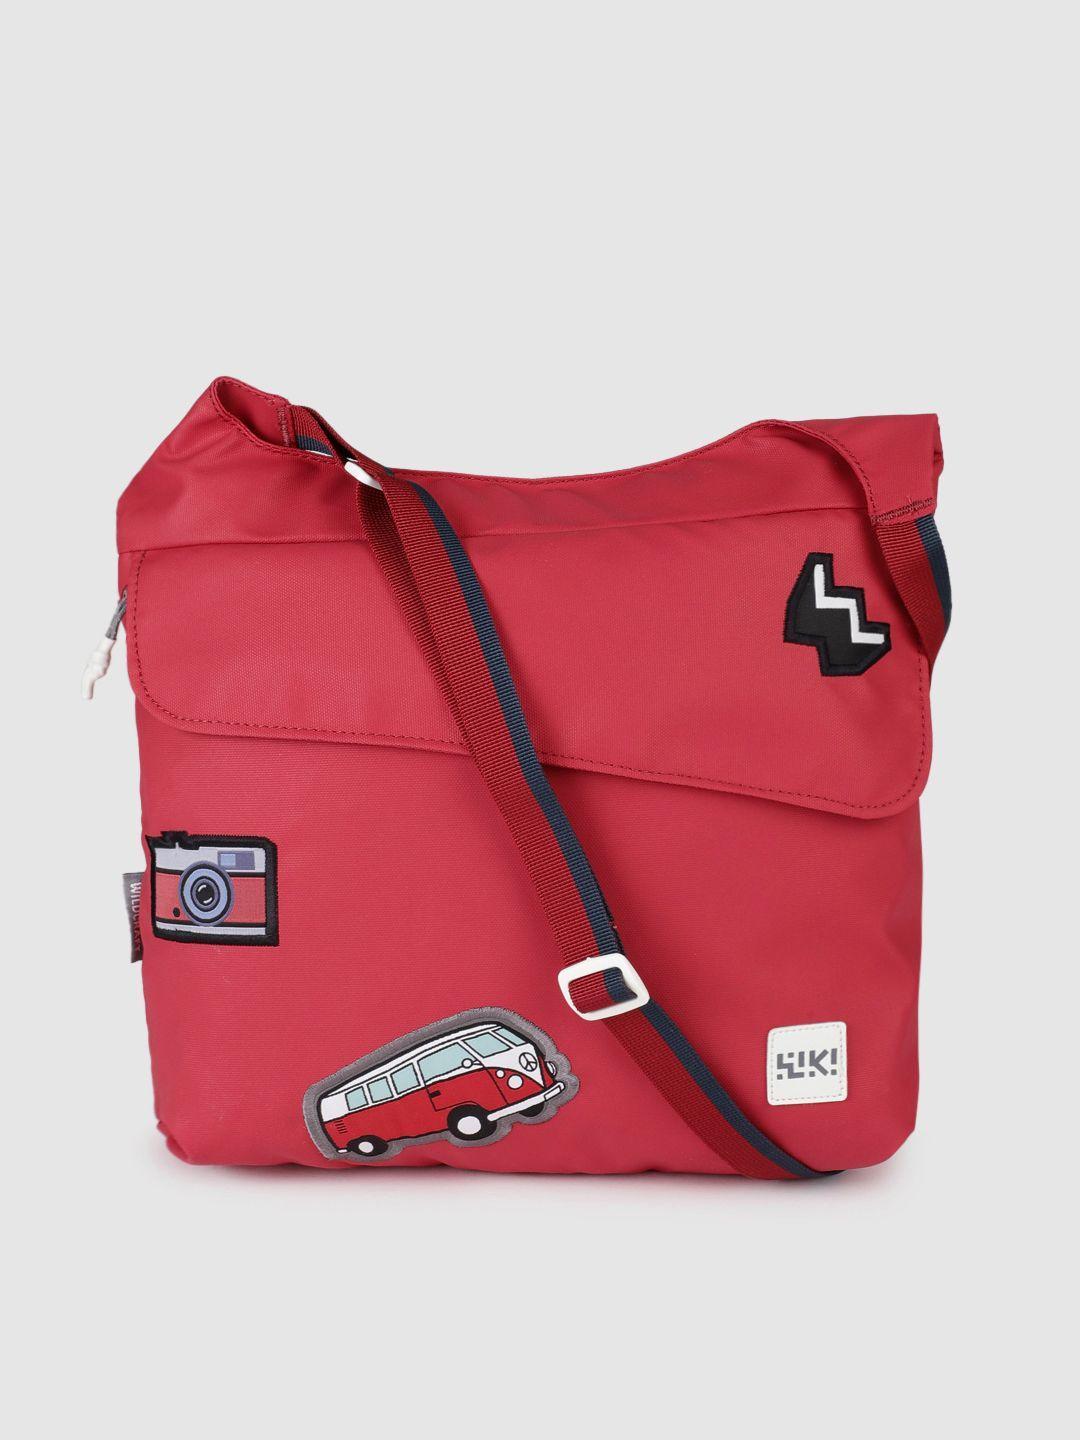 wildcraft unisex red printed grab-it plus messenger bag